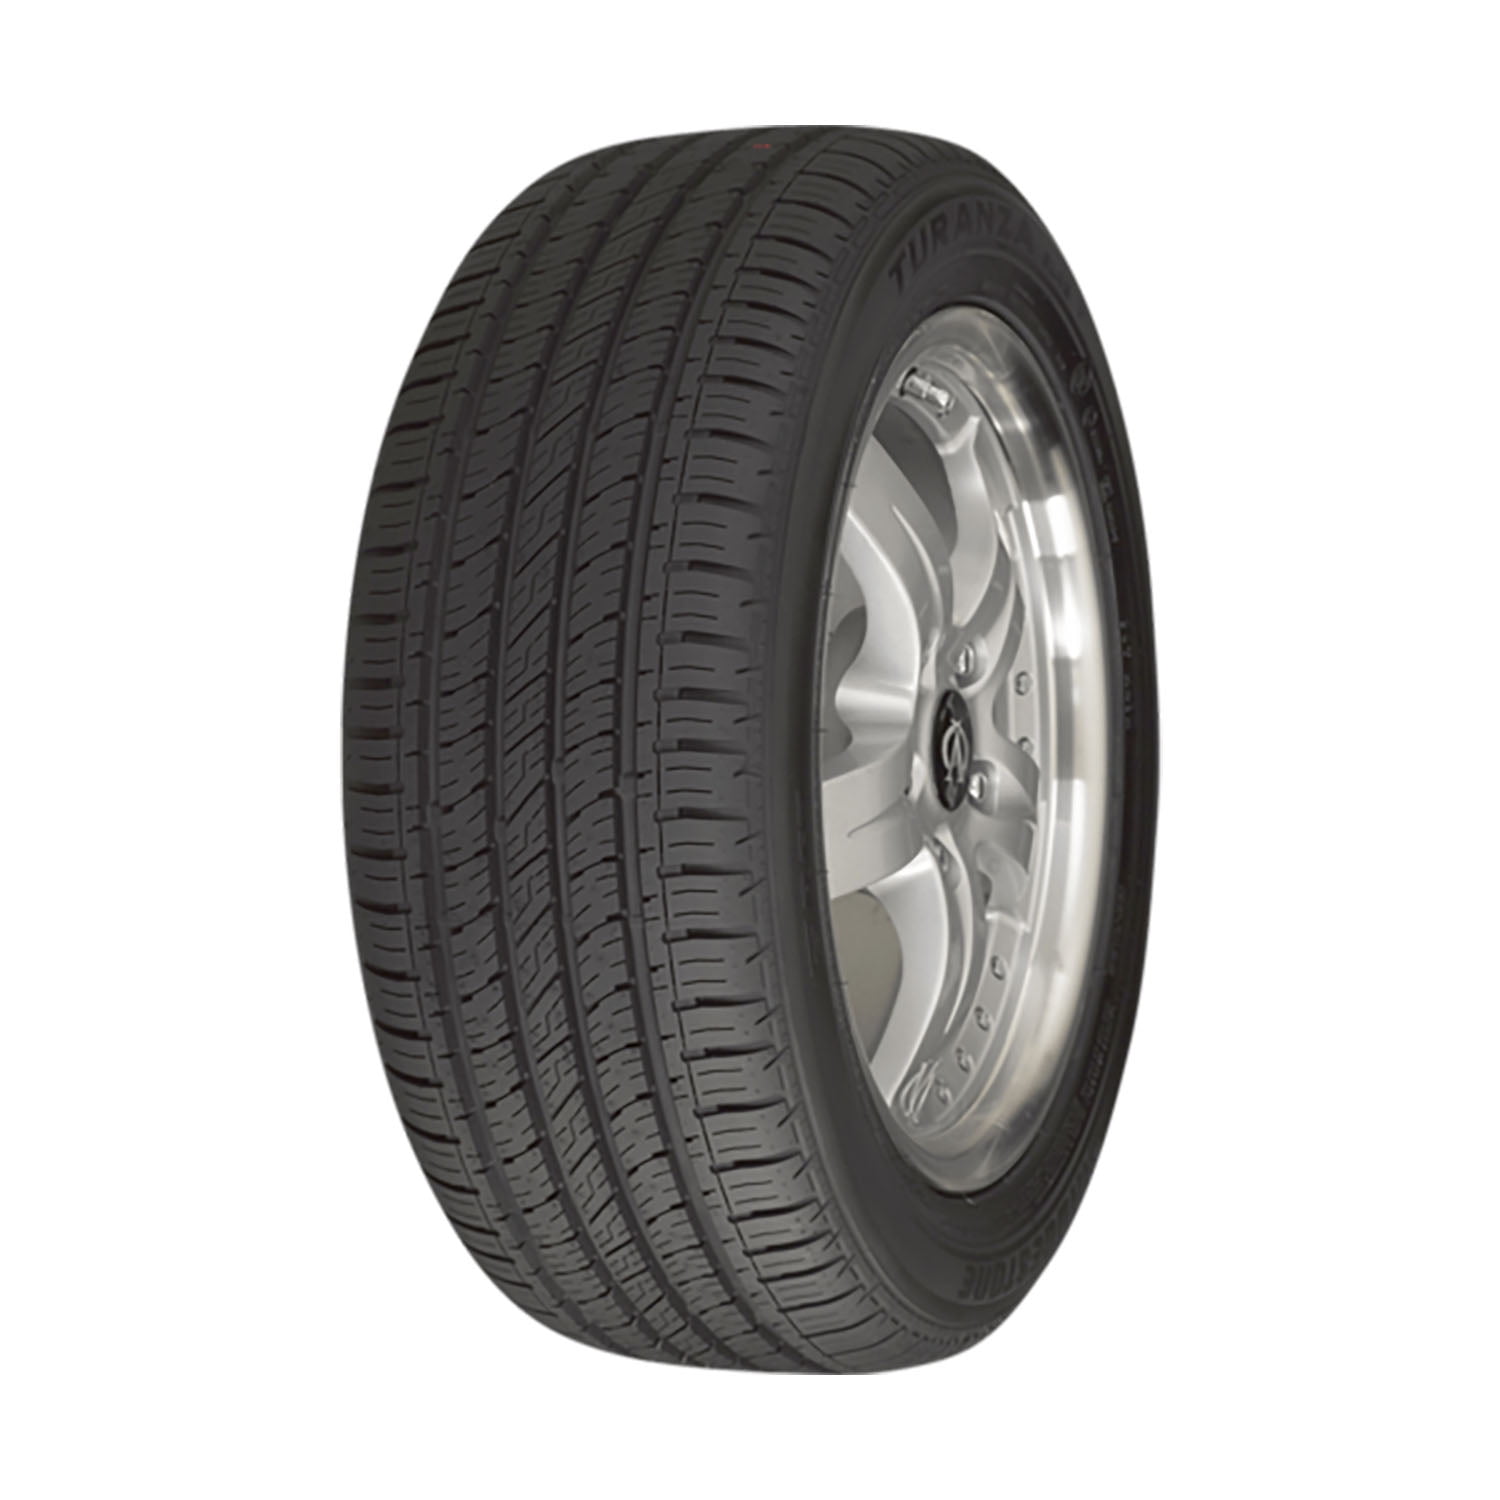 Bridgestone Turanza EL42 RFT All Season 205/55R16 91H Passenger Tire